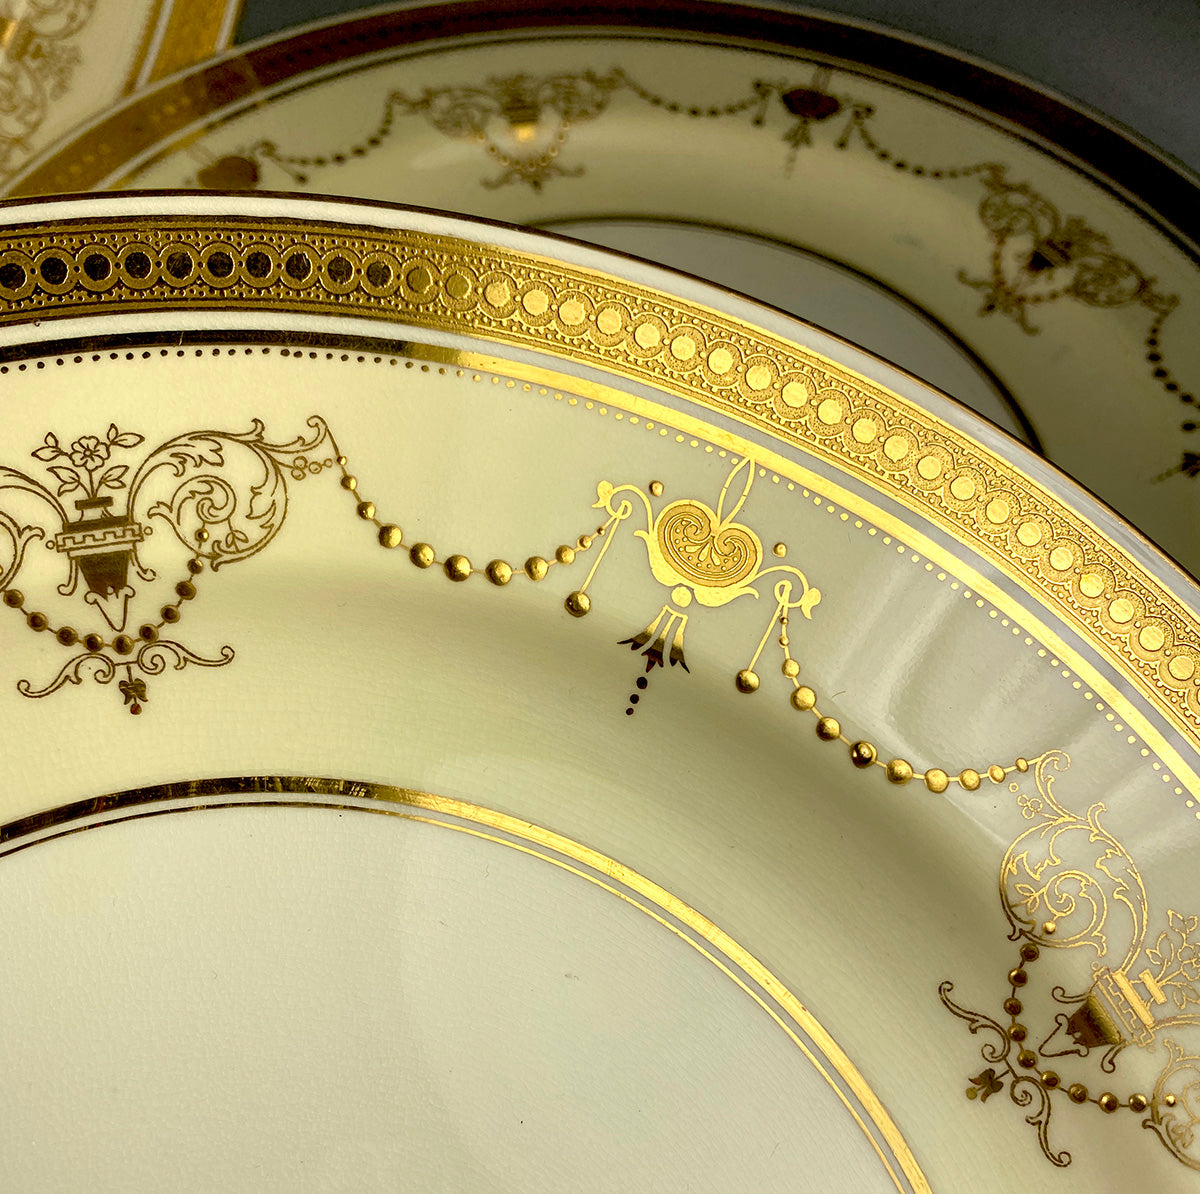 Set of 4 Fine Antique Minton Dinner Plates, Raised Gold Enamel, Made for Bailey Biddle Banks